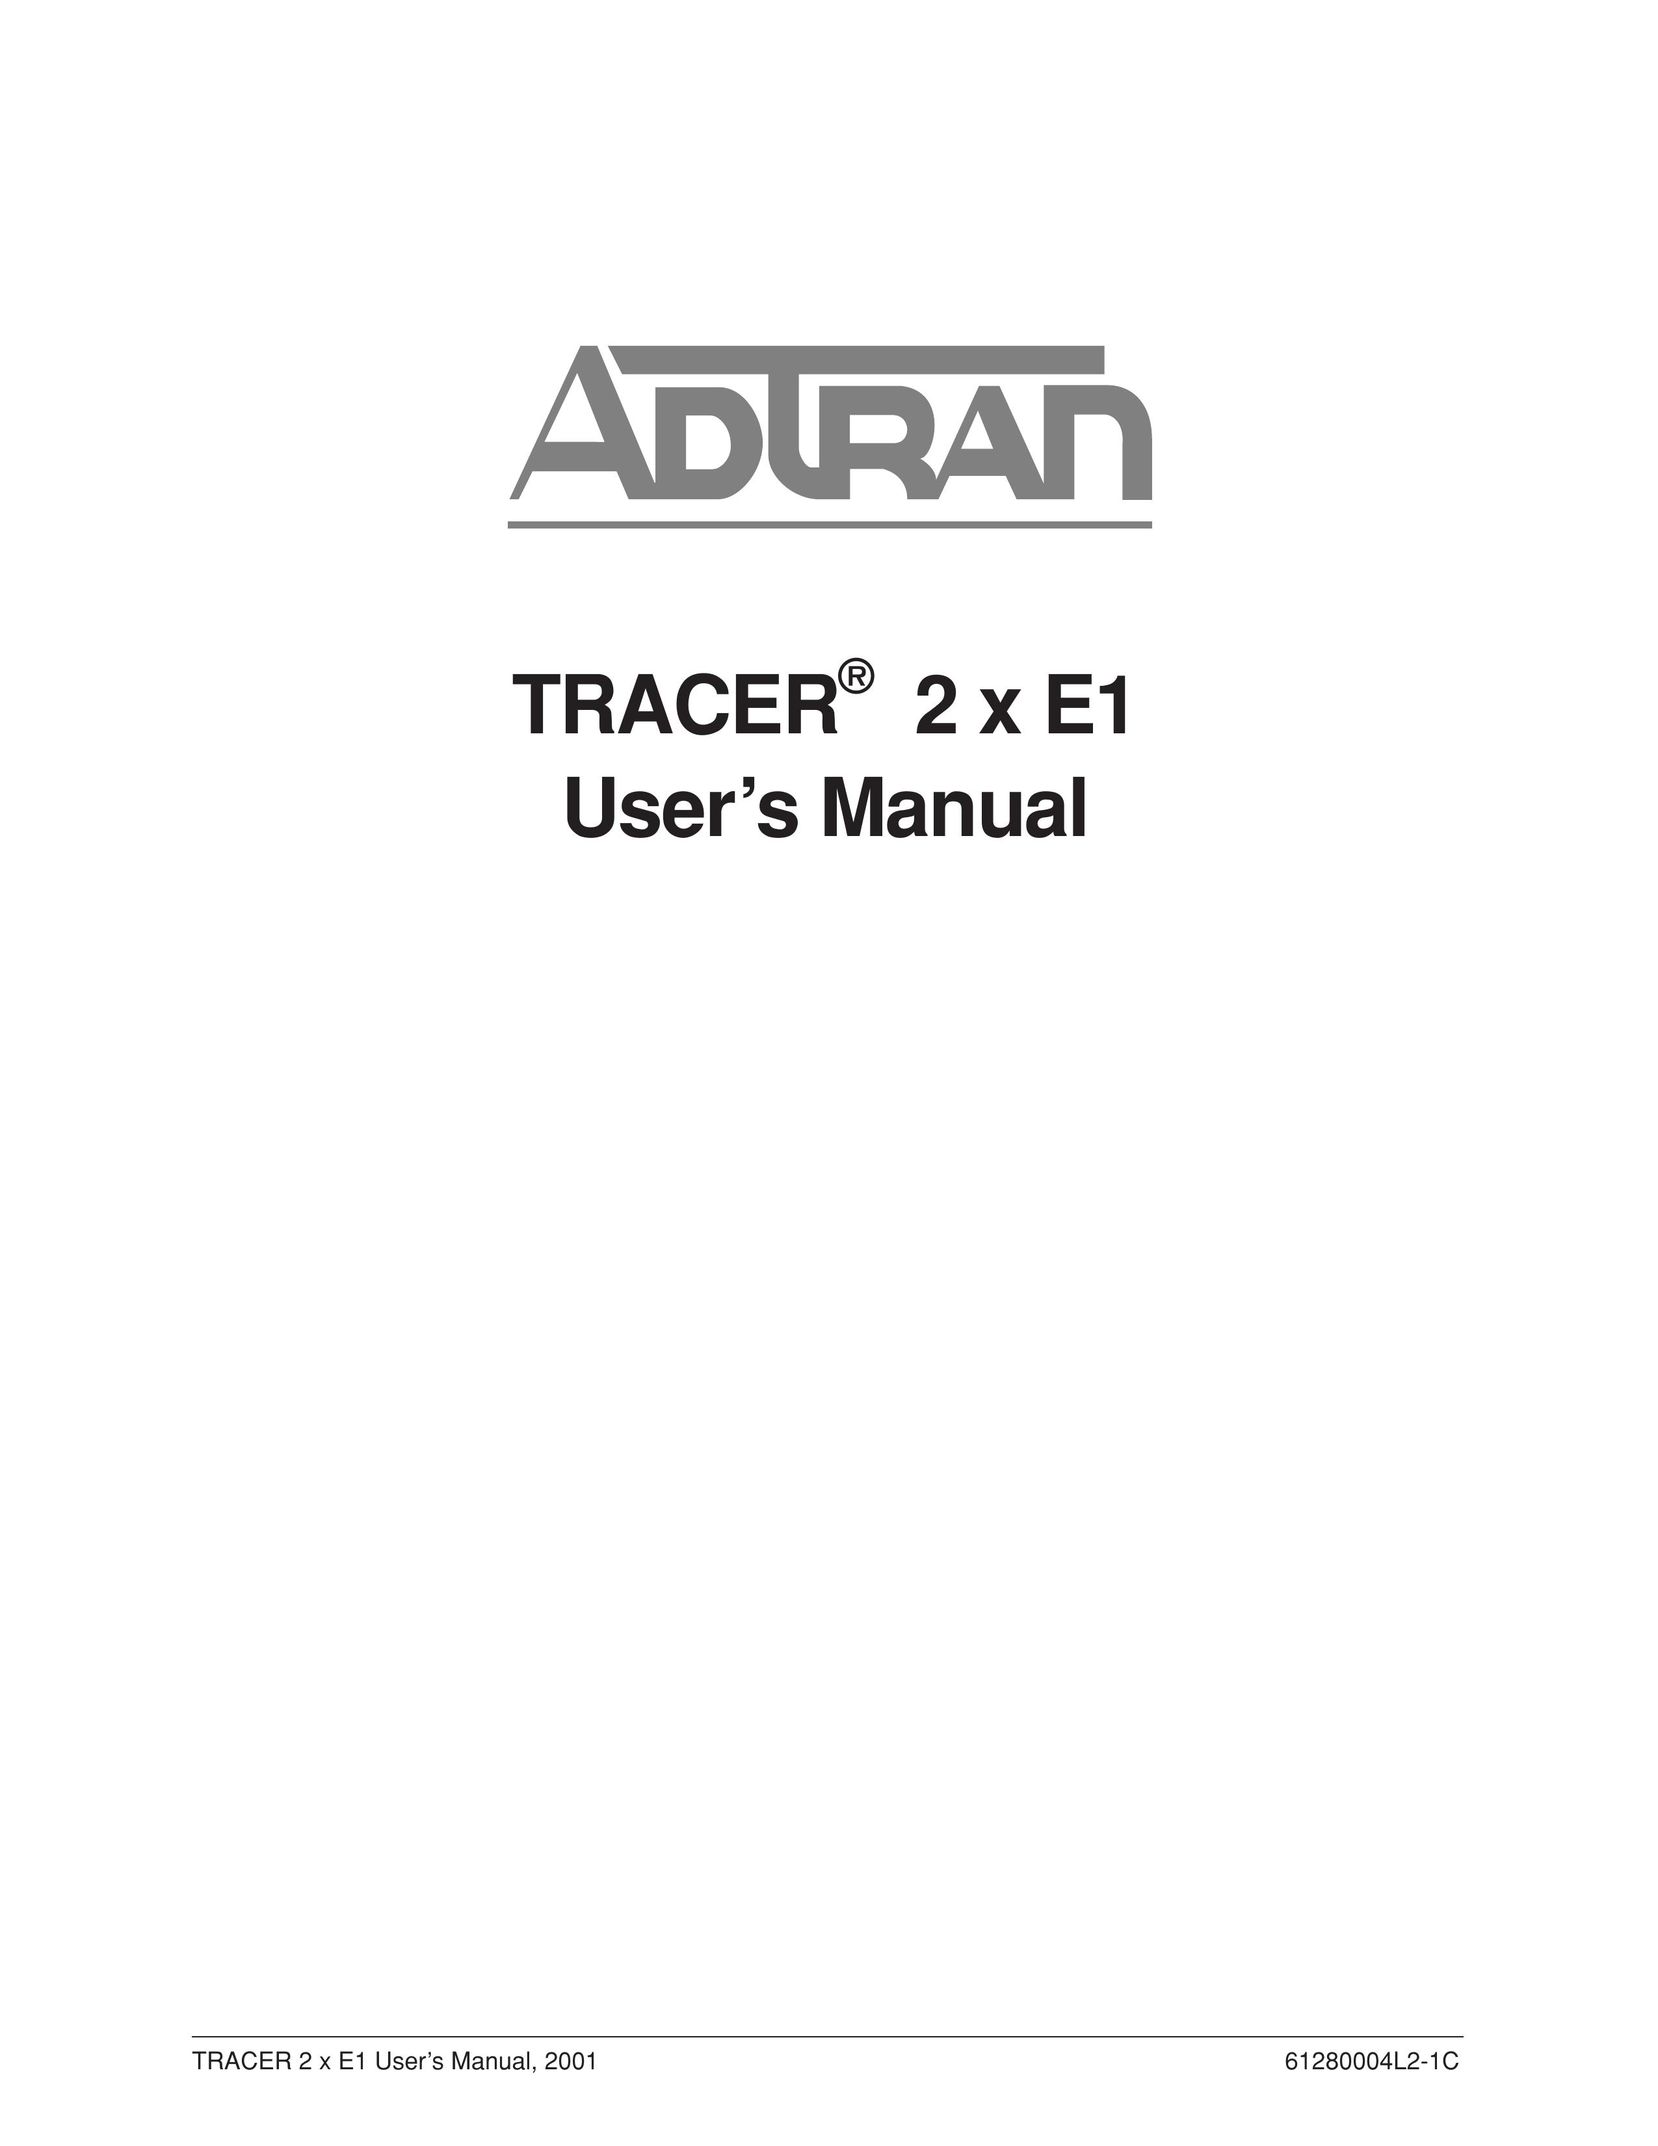 ADTRAN 2 x E1 Network Router User Manual